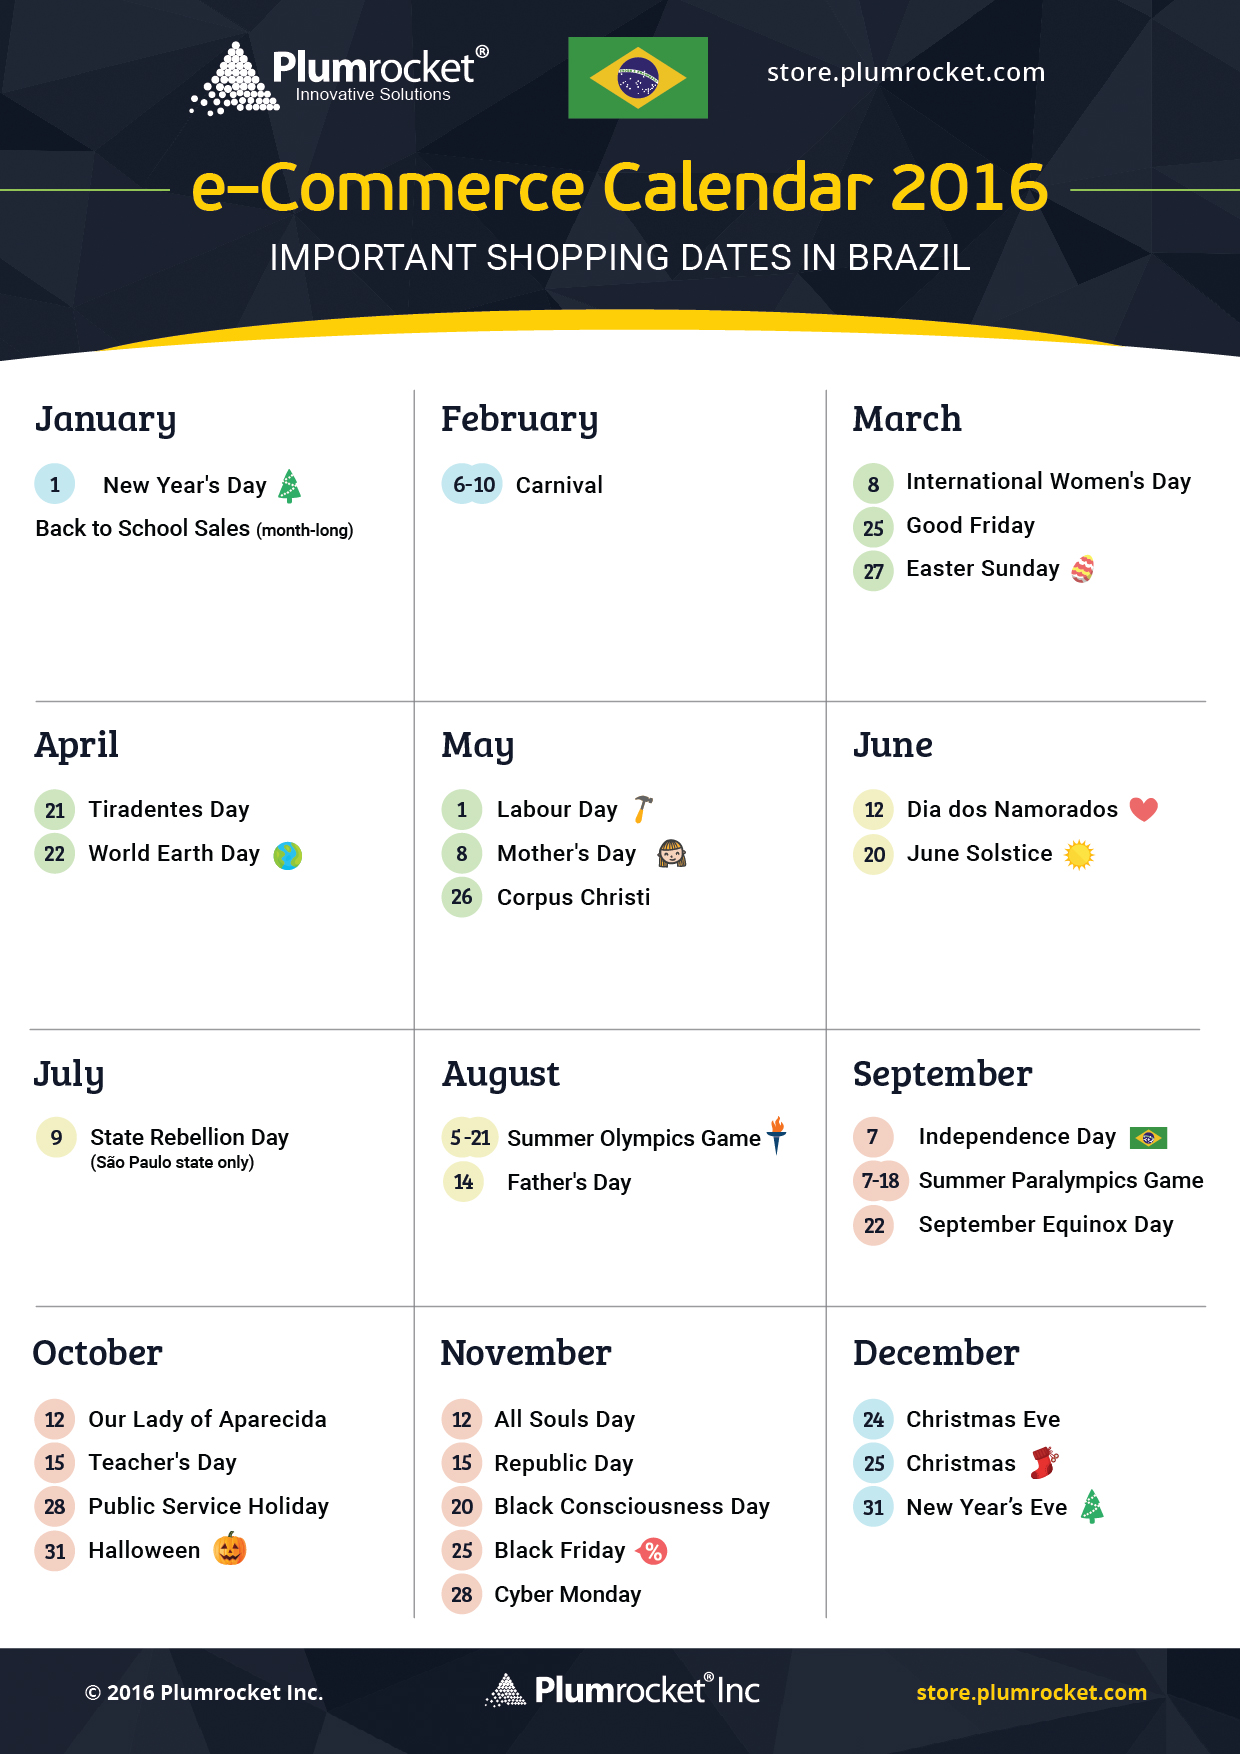 Marketing Calendar Brazil 2016 by Plumrocket